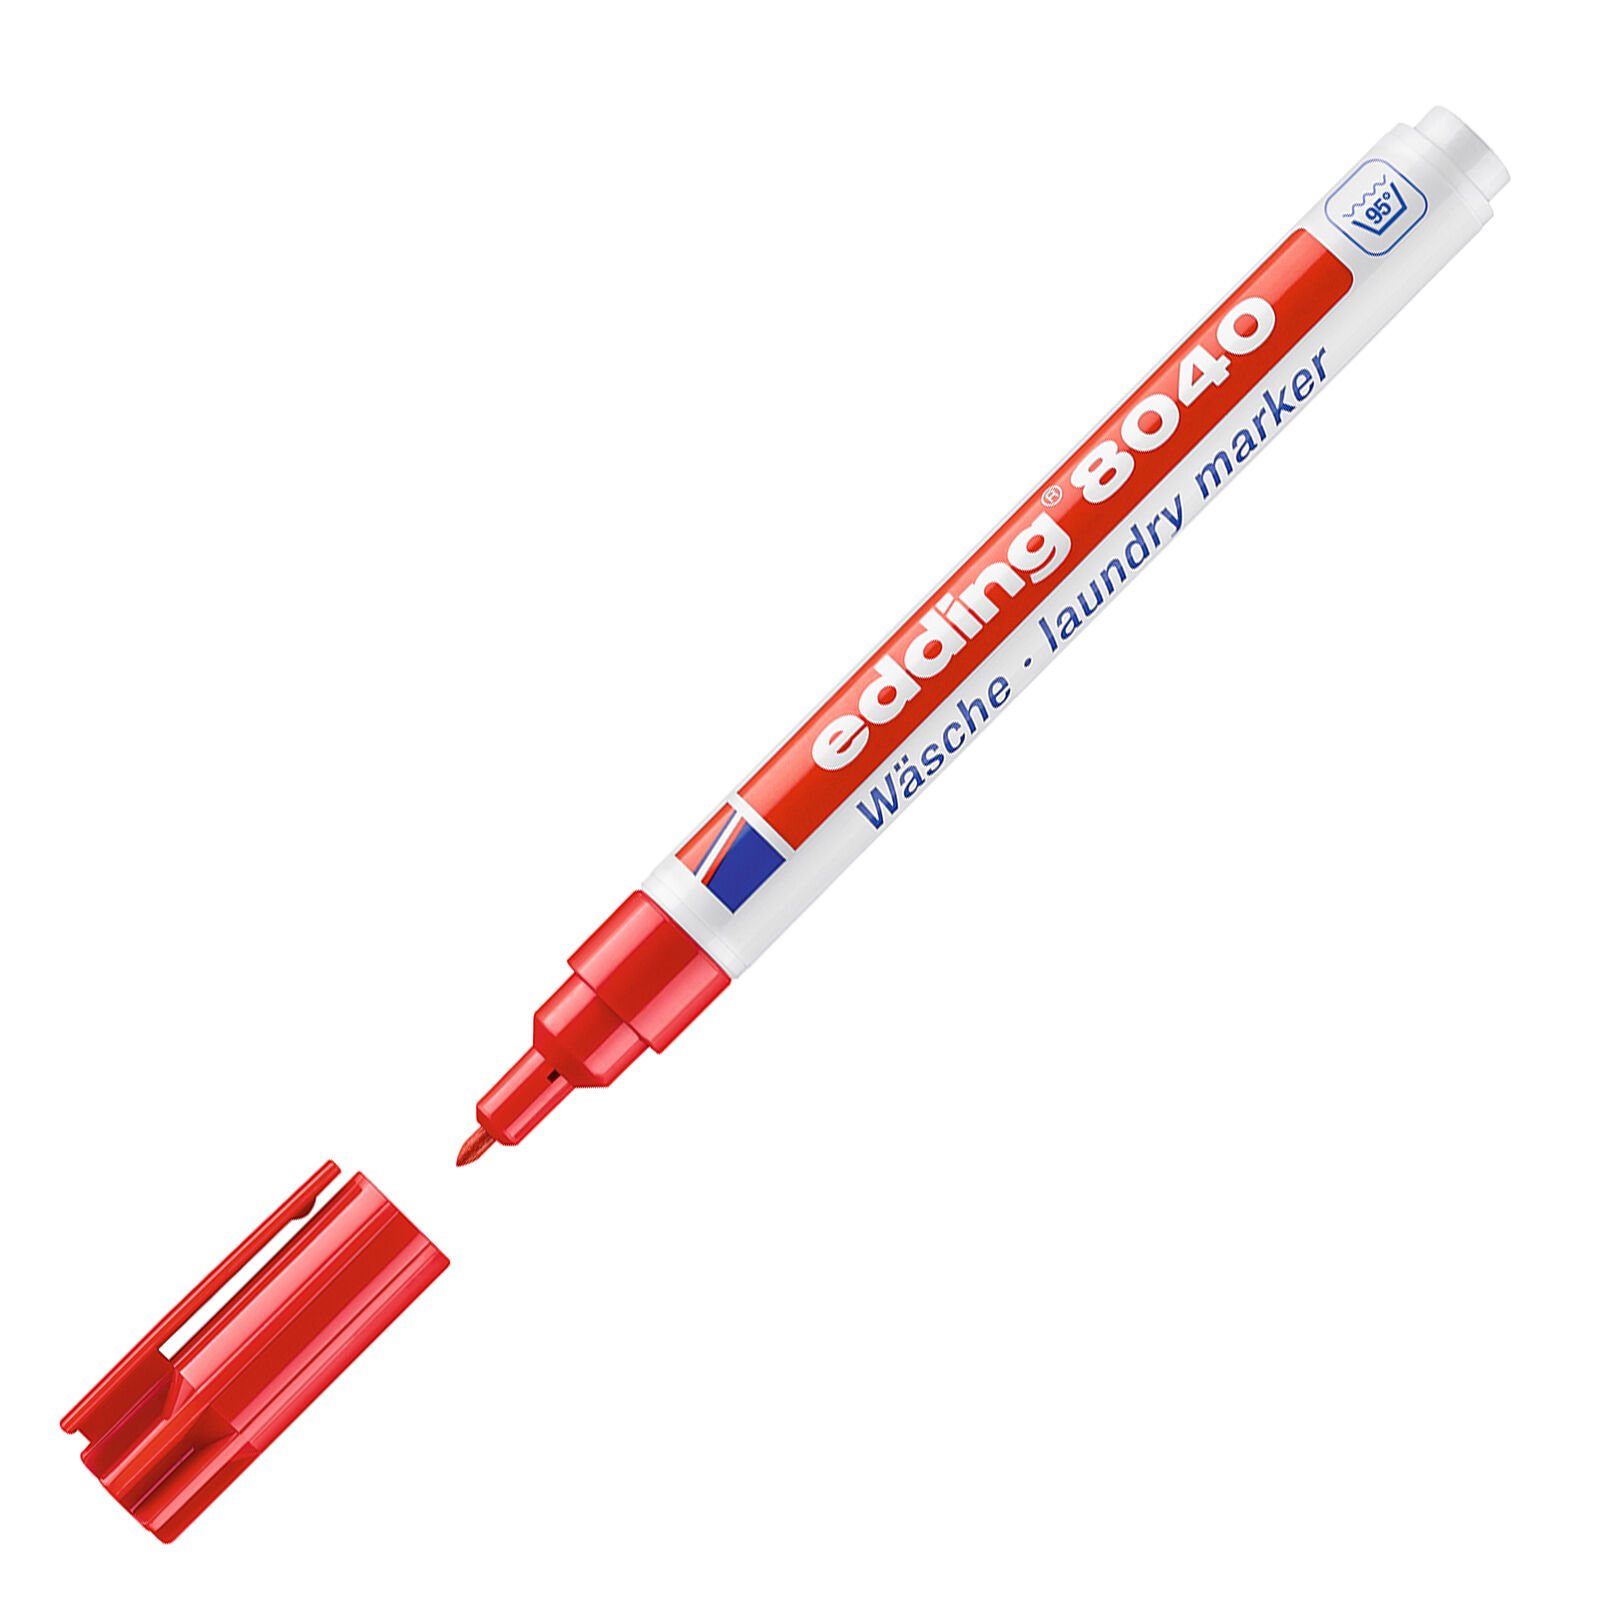 Edding 8040 Çamaşır Kalemi, Yuvarlak Uç, 1 mm, Kırmızı